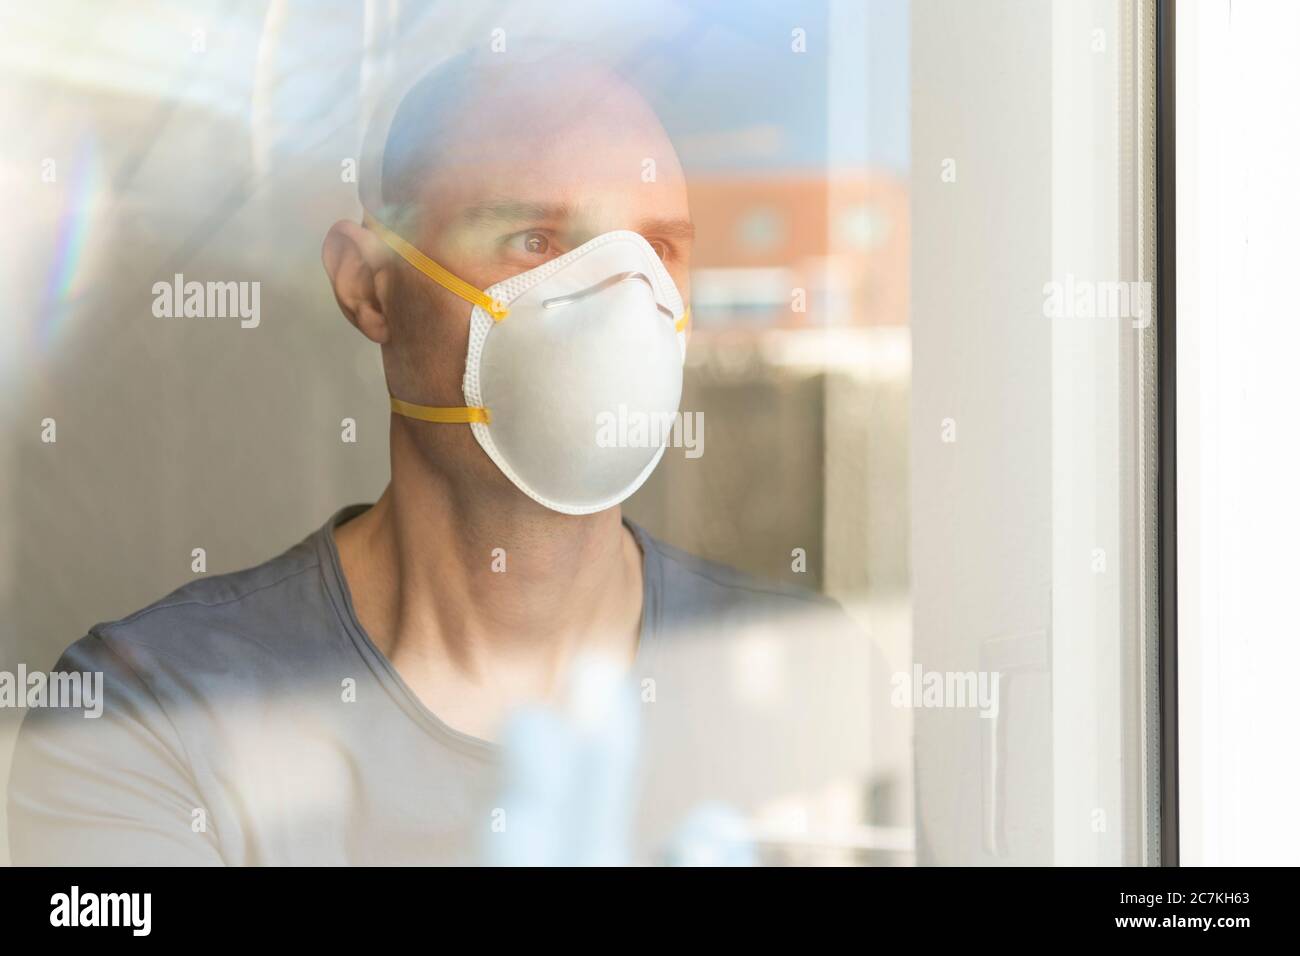 Window, quarantine, isolation, corona virus, pandemic, landscape format Stock Photo